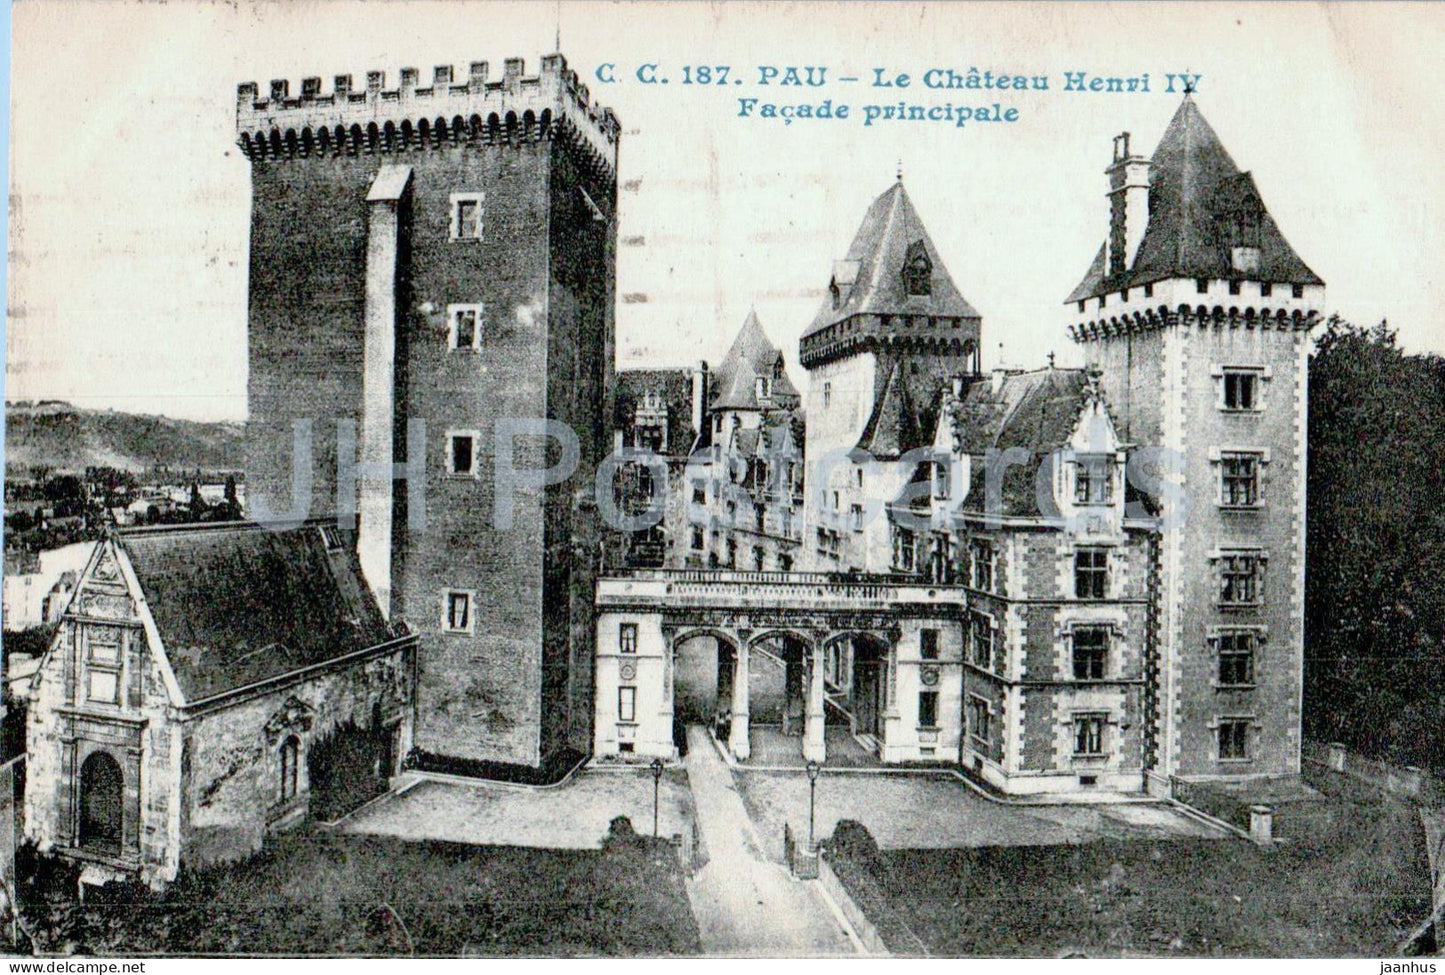 Pau - Le Chateau Henri IV - Facade principale - castle - 187 - old postcard - 1926 - France - used - JH Postcards